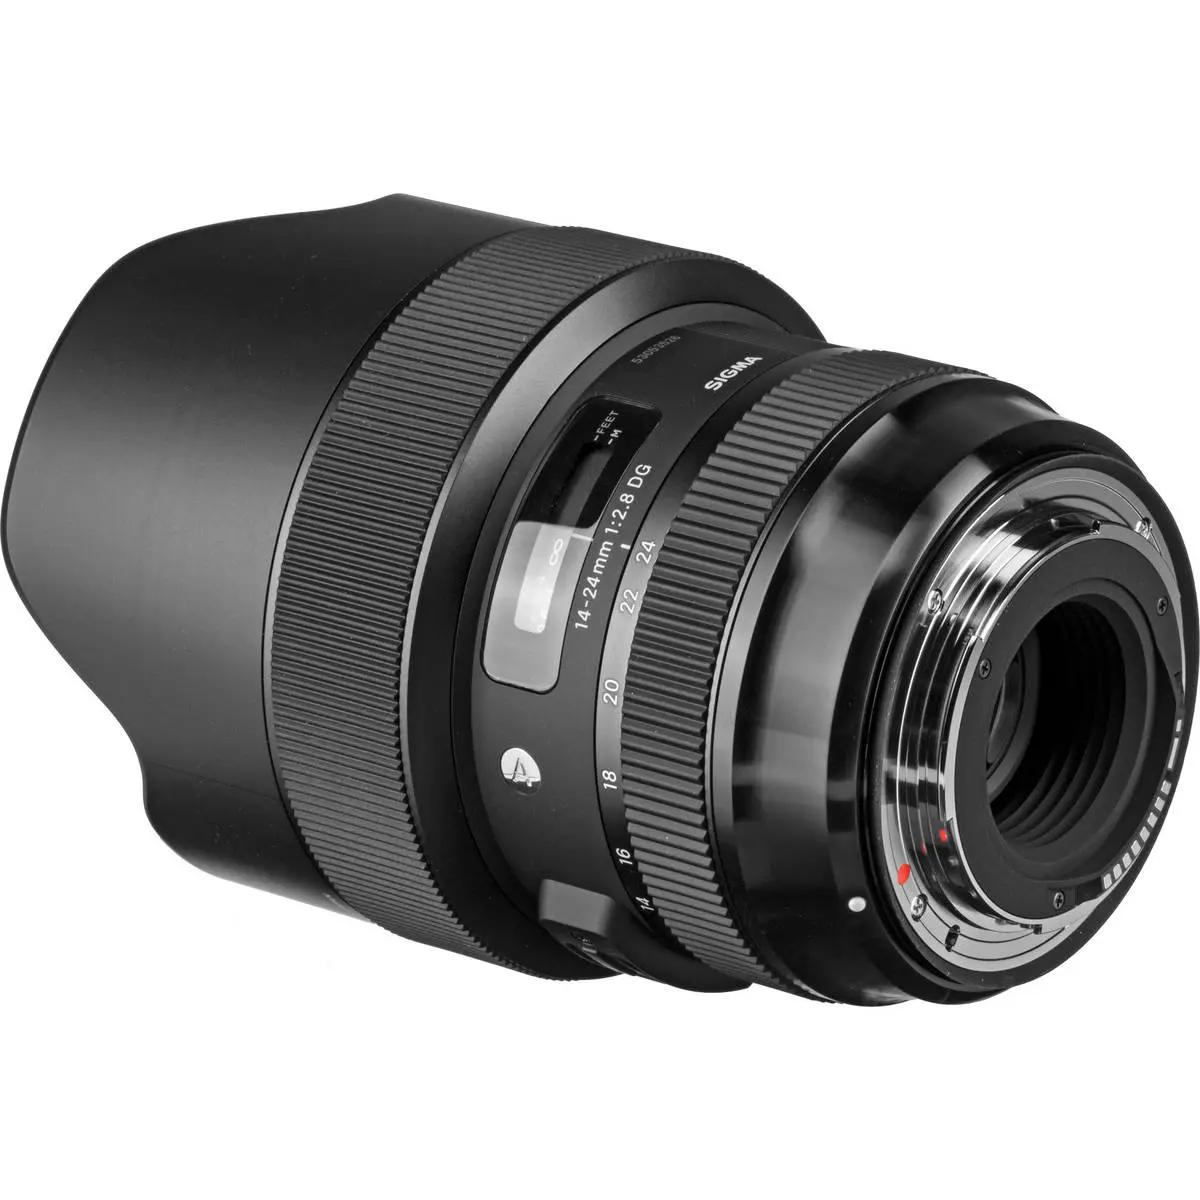 3. Sigma 14-24mm F2.8 DG HSM | Art (Nikon) Lens